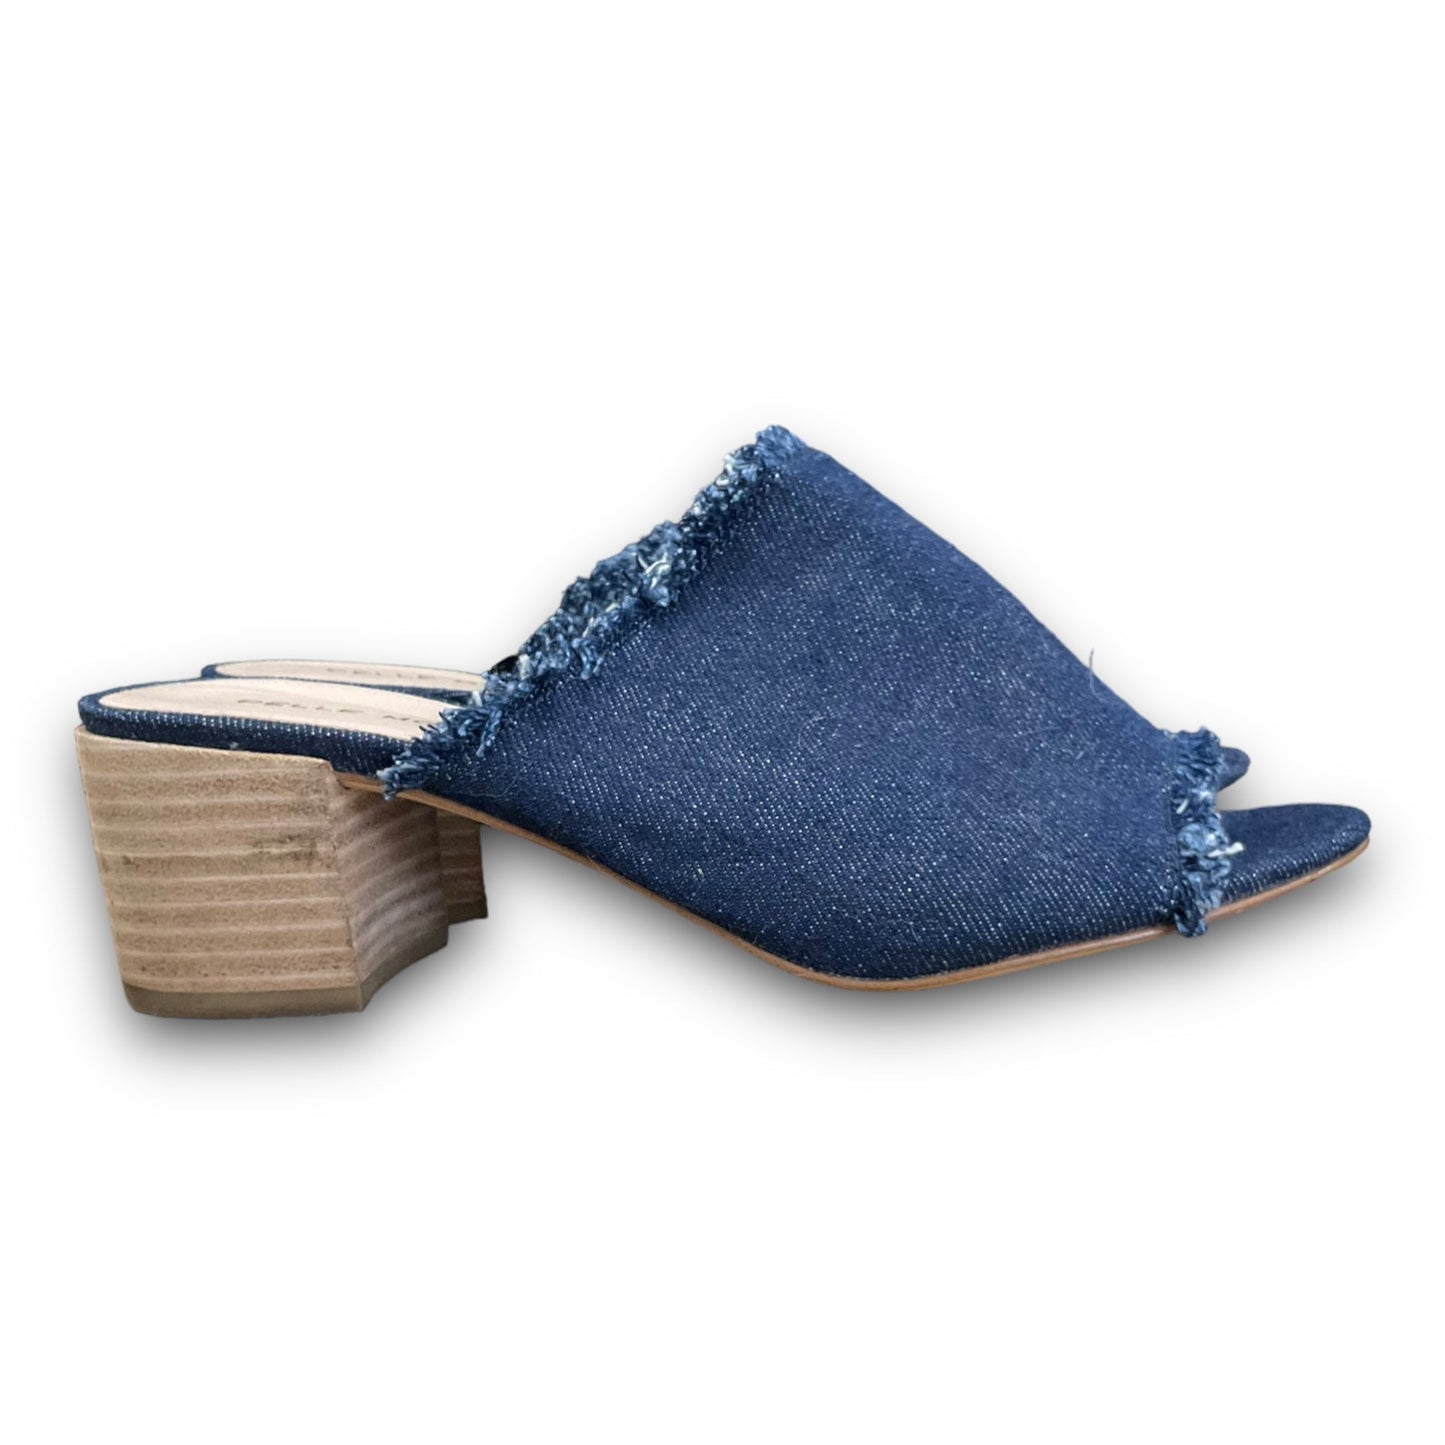 Blue Denim Shoes Heels Block Clothes Mentor, Size 8